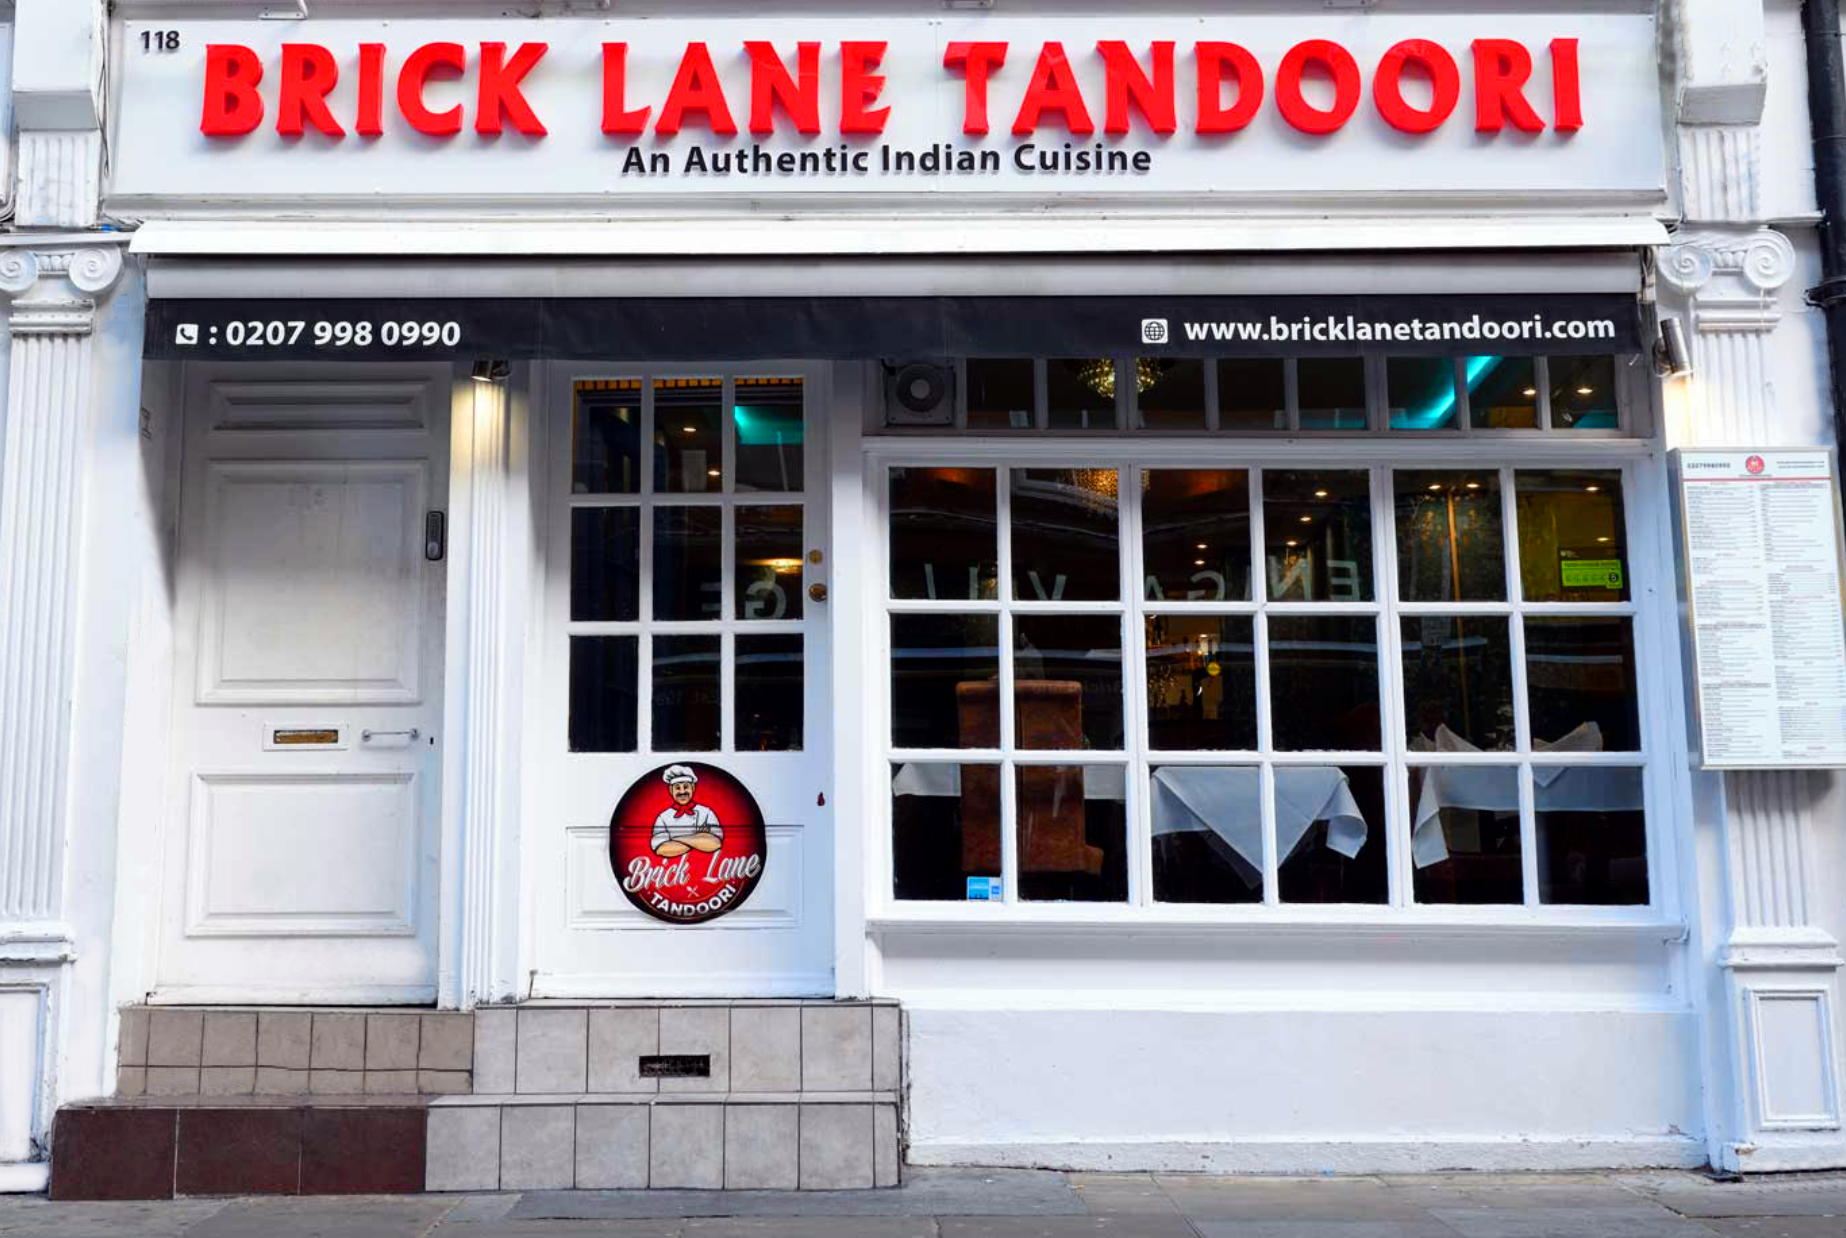 Brick Lane Tandoori restaurant, Brick Lane, East End of London.